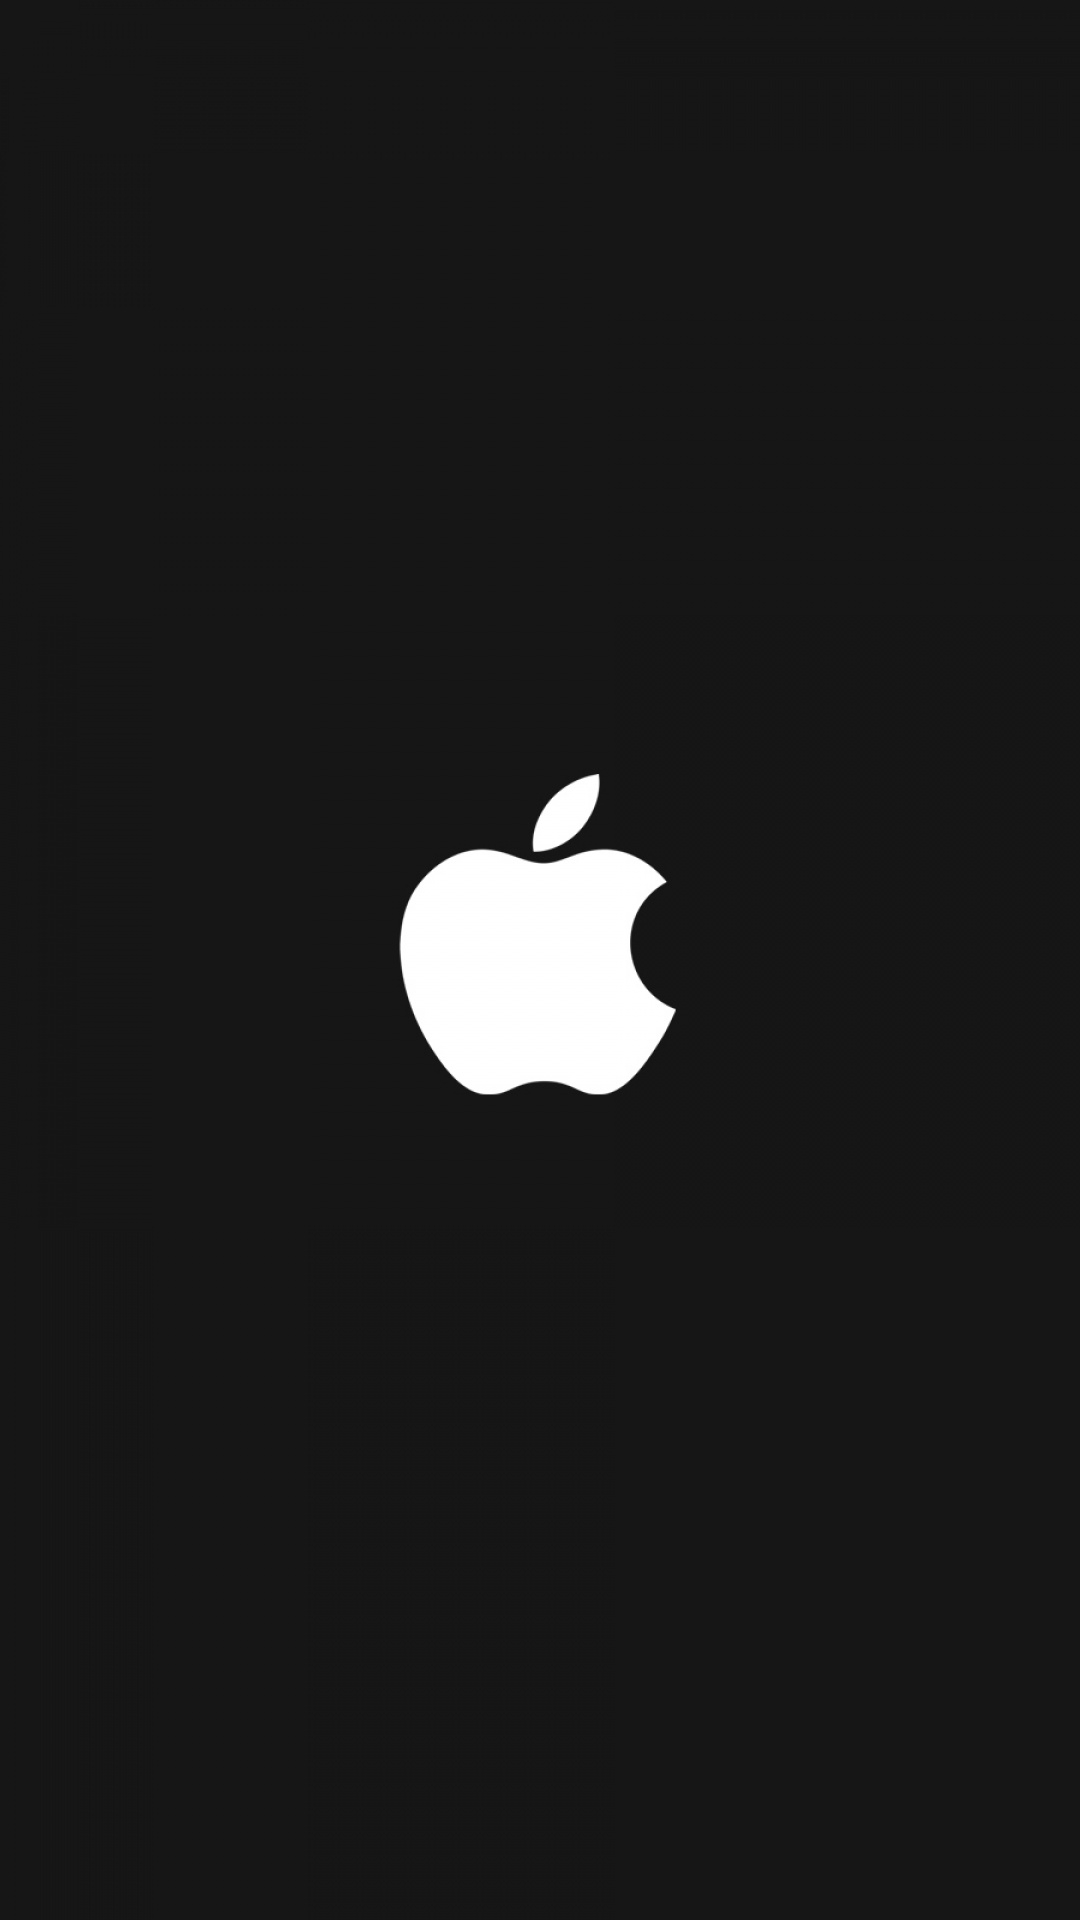 49 Iphone 6 Apple Logo Wallpaper On Wallpapersafari